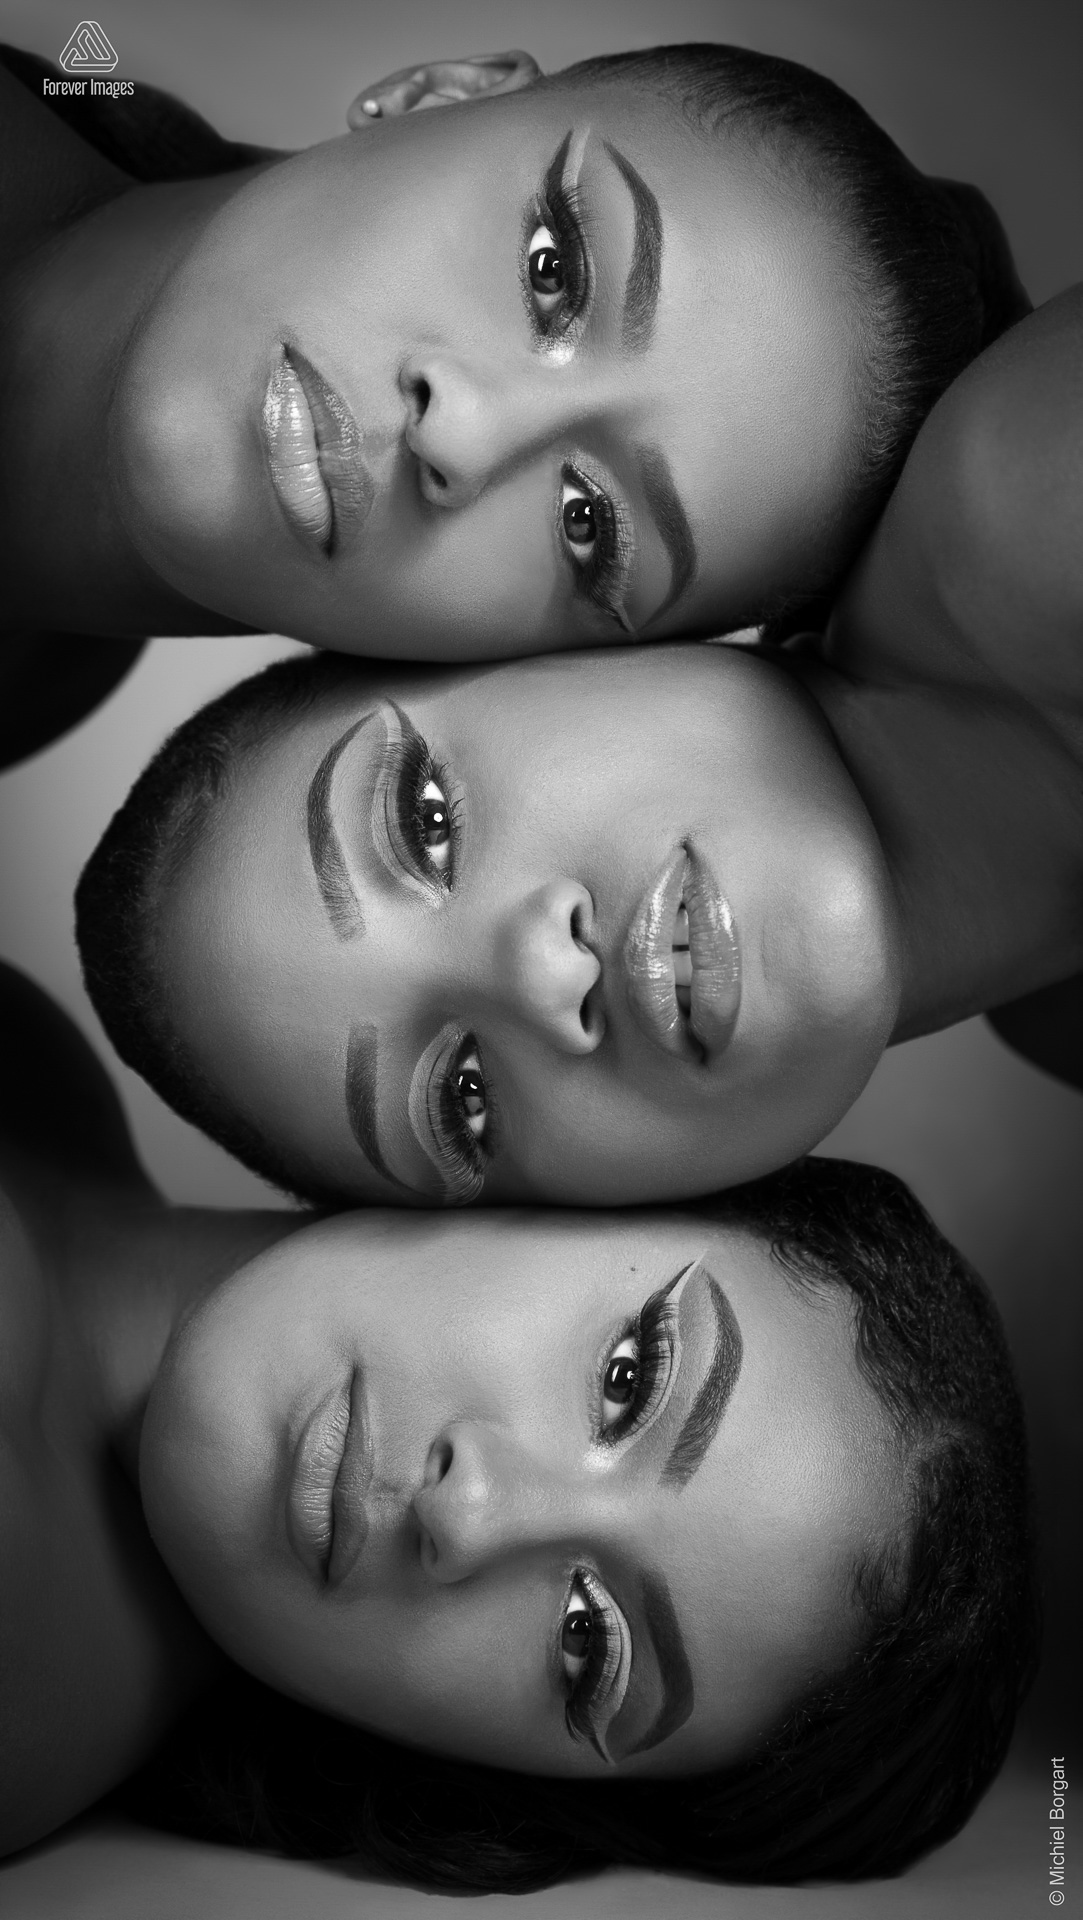 Portretfoto zwart-wit in studio 3 dames glamour | Sowainy Gijsbertha Charliza Francisca Veronica Statia | Portretfotograaf Michiel Borgart - Forever Images.